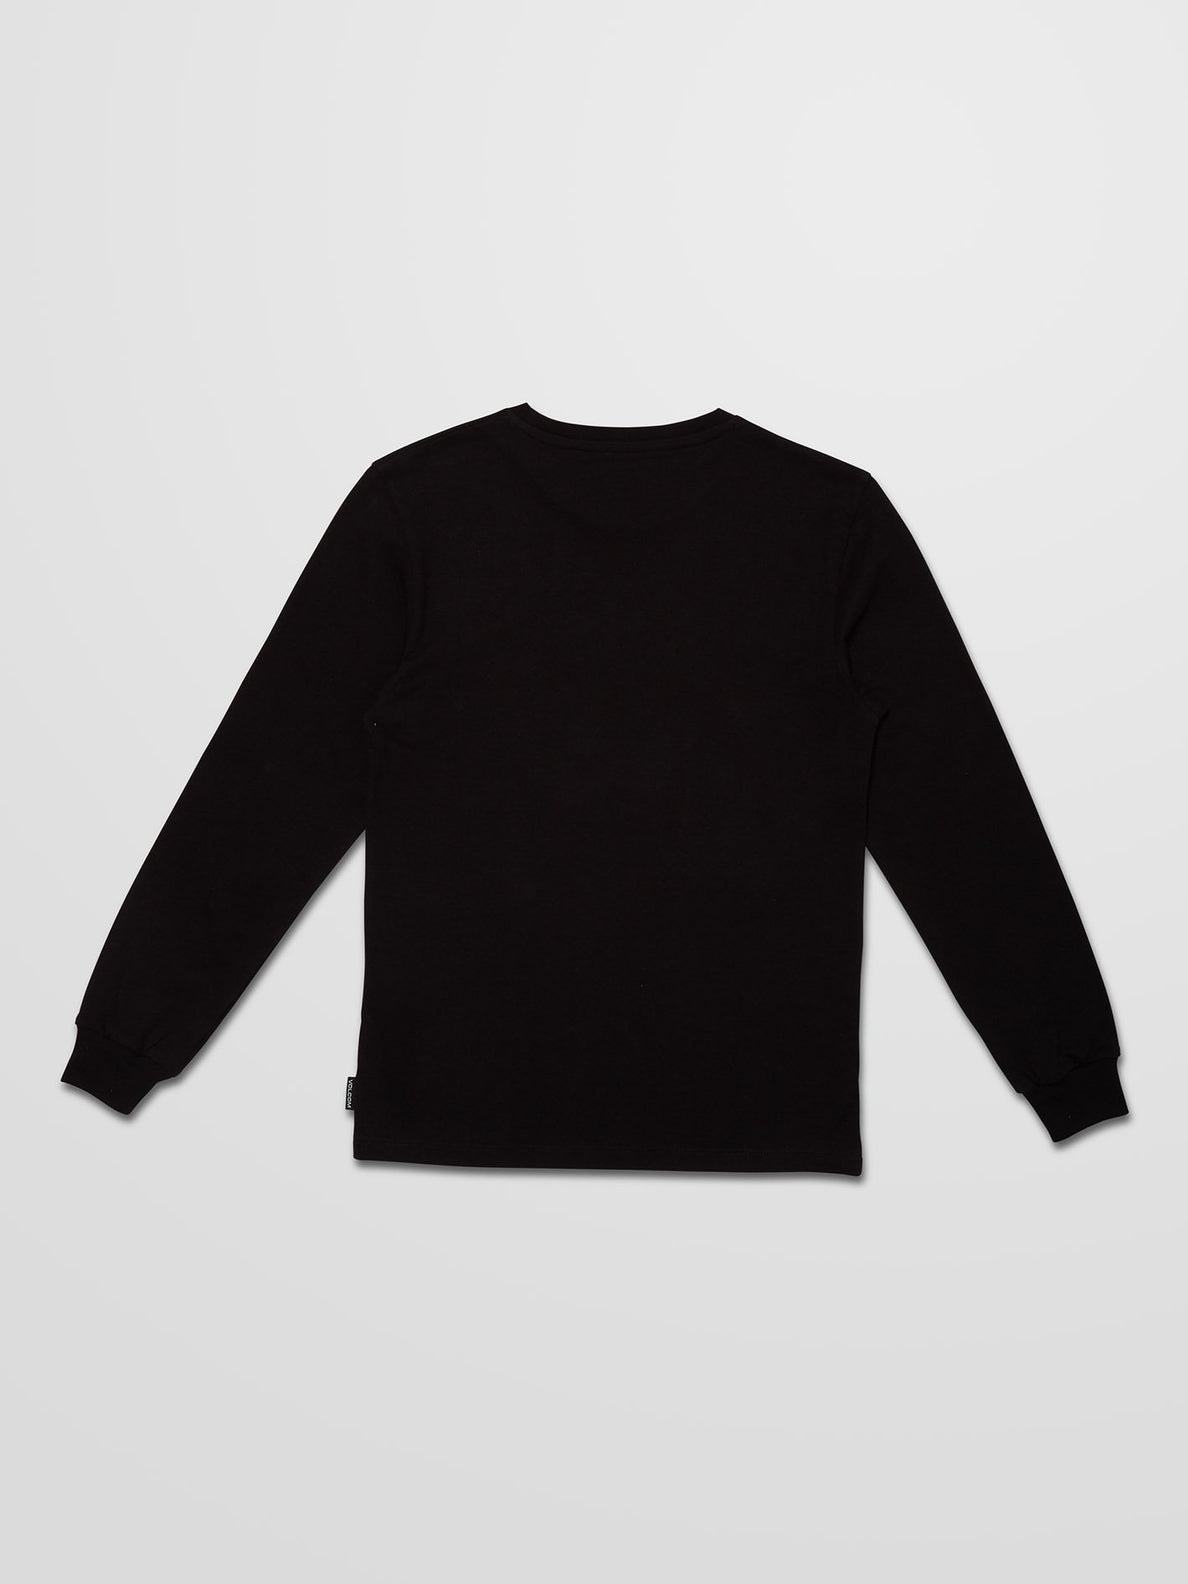 M. Loeffler T-shirt - BLACK - (BOYS) (C3632108_BLK) [B]